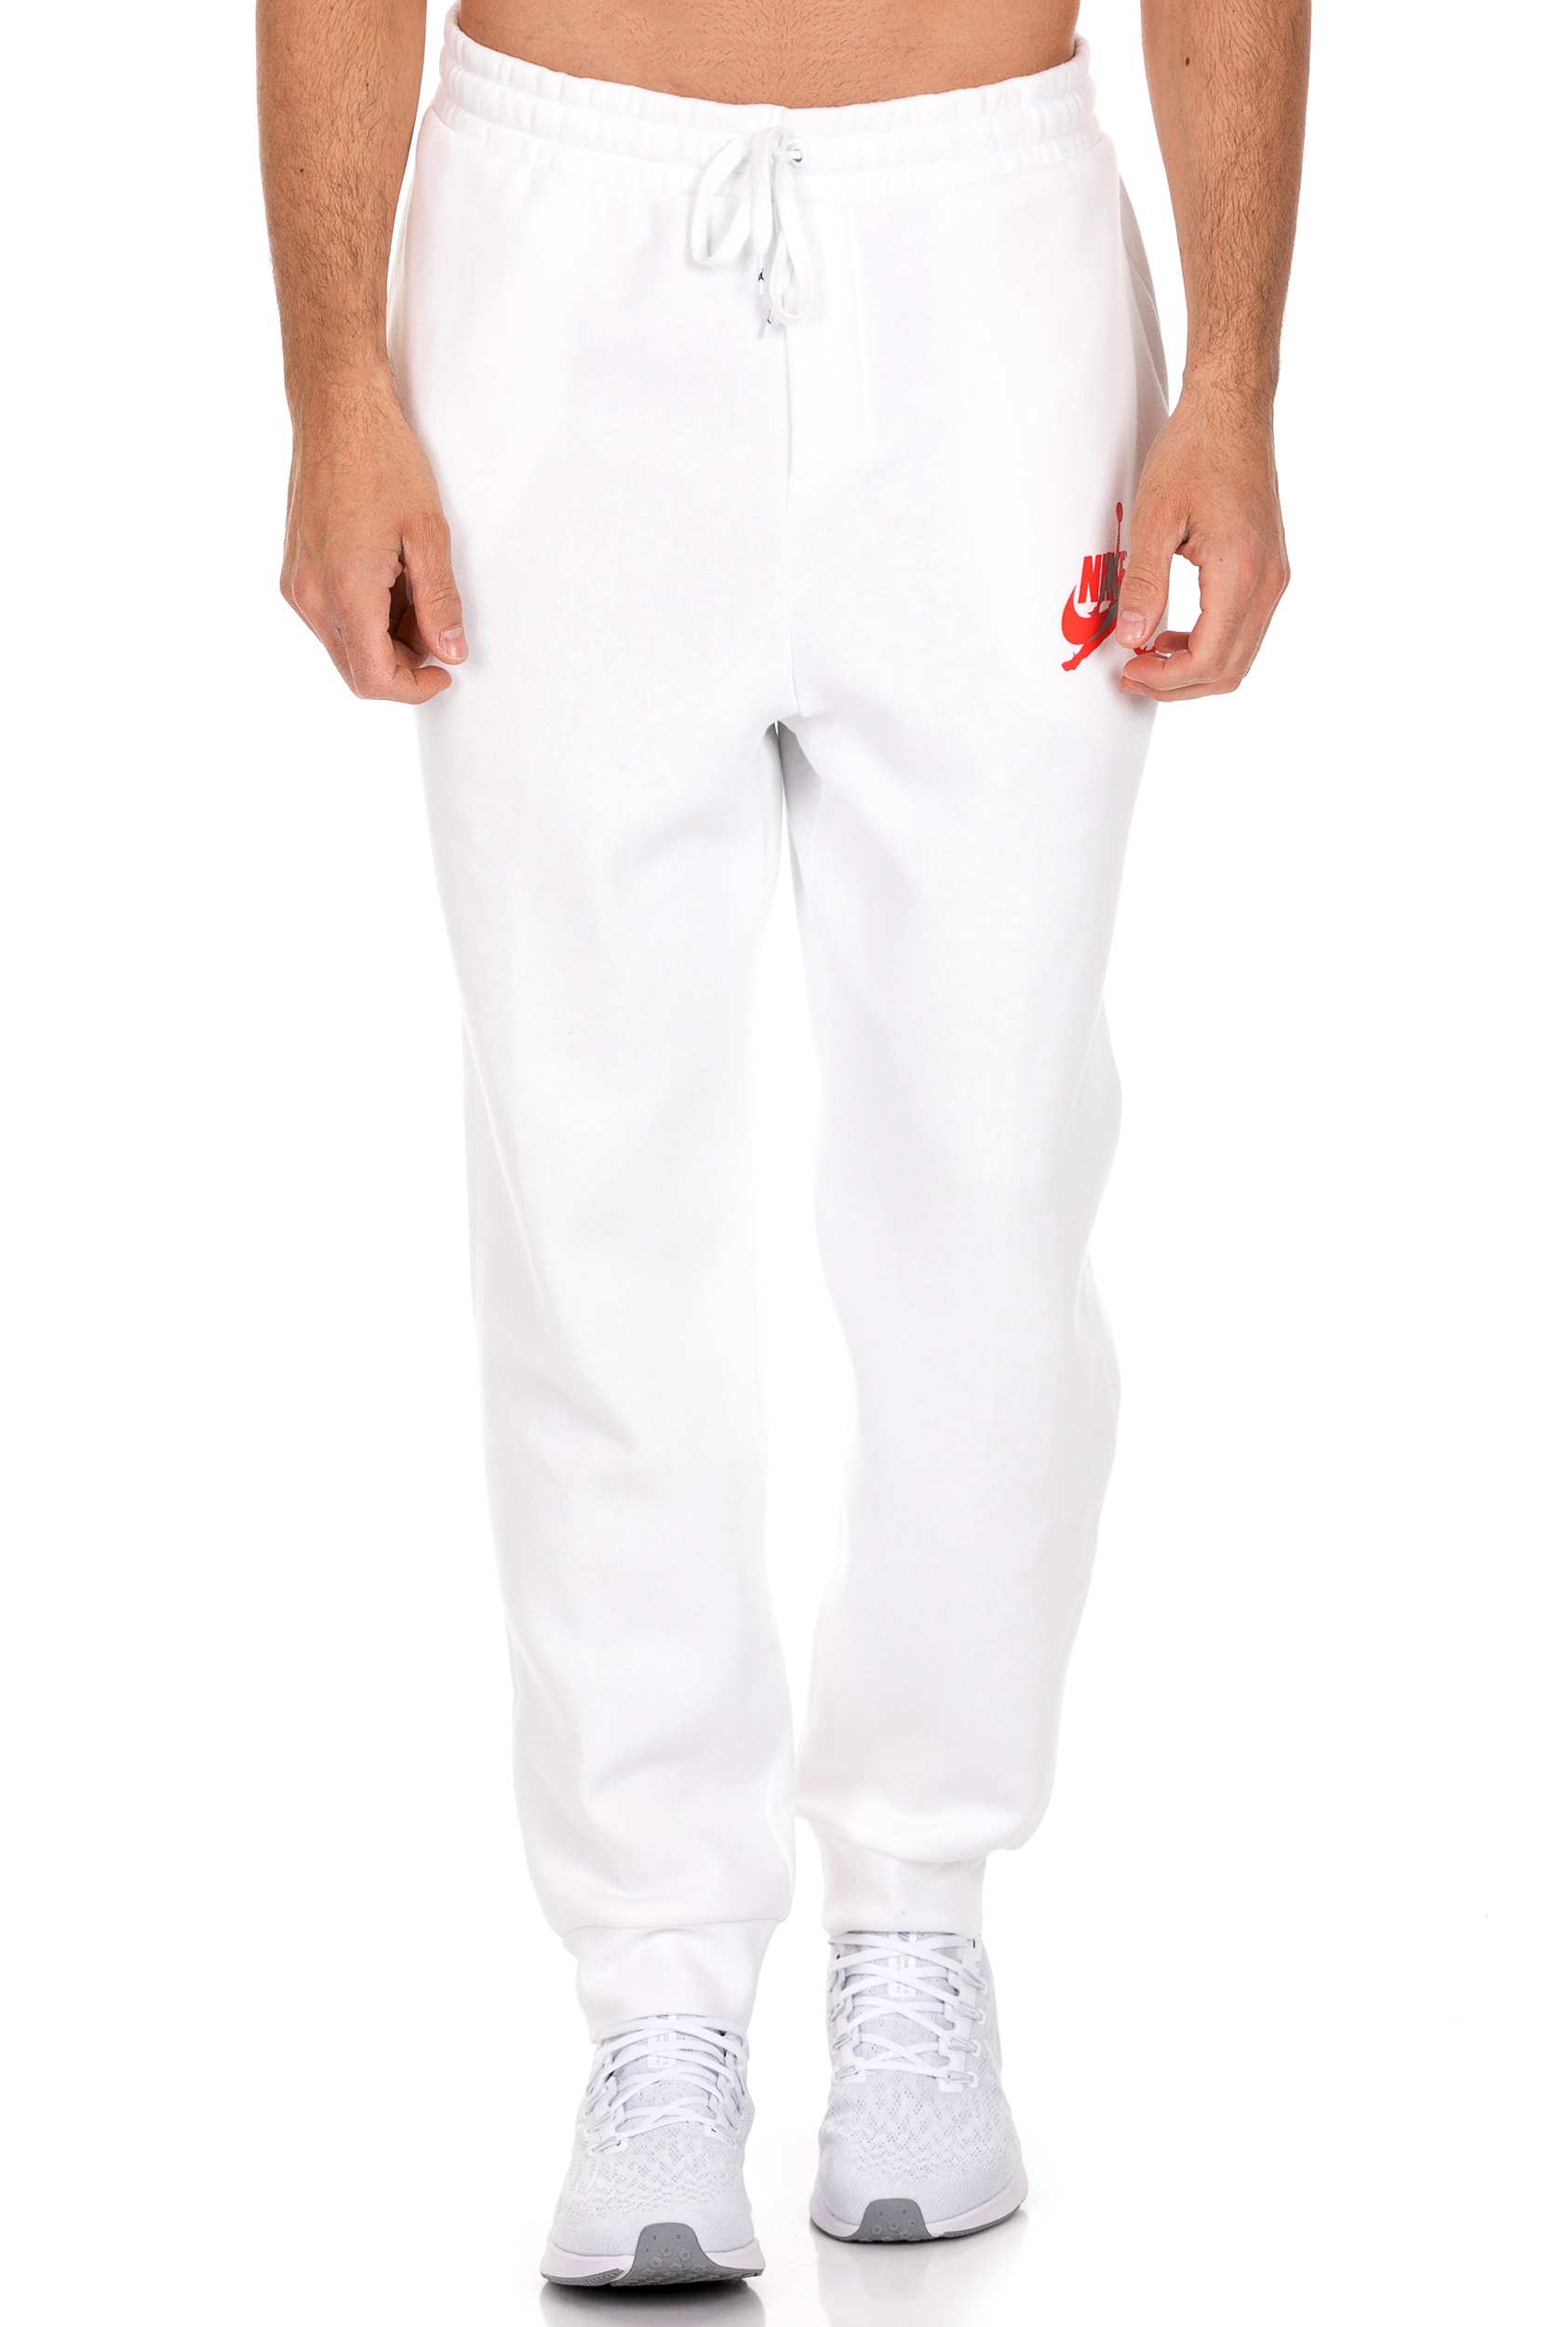 NIKE - Ανδρικό παντελόνι φόρμας NIKE ΜJ JUMPMAN CLASSICS λευκό